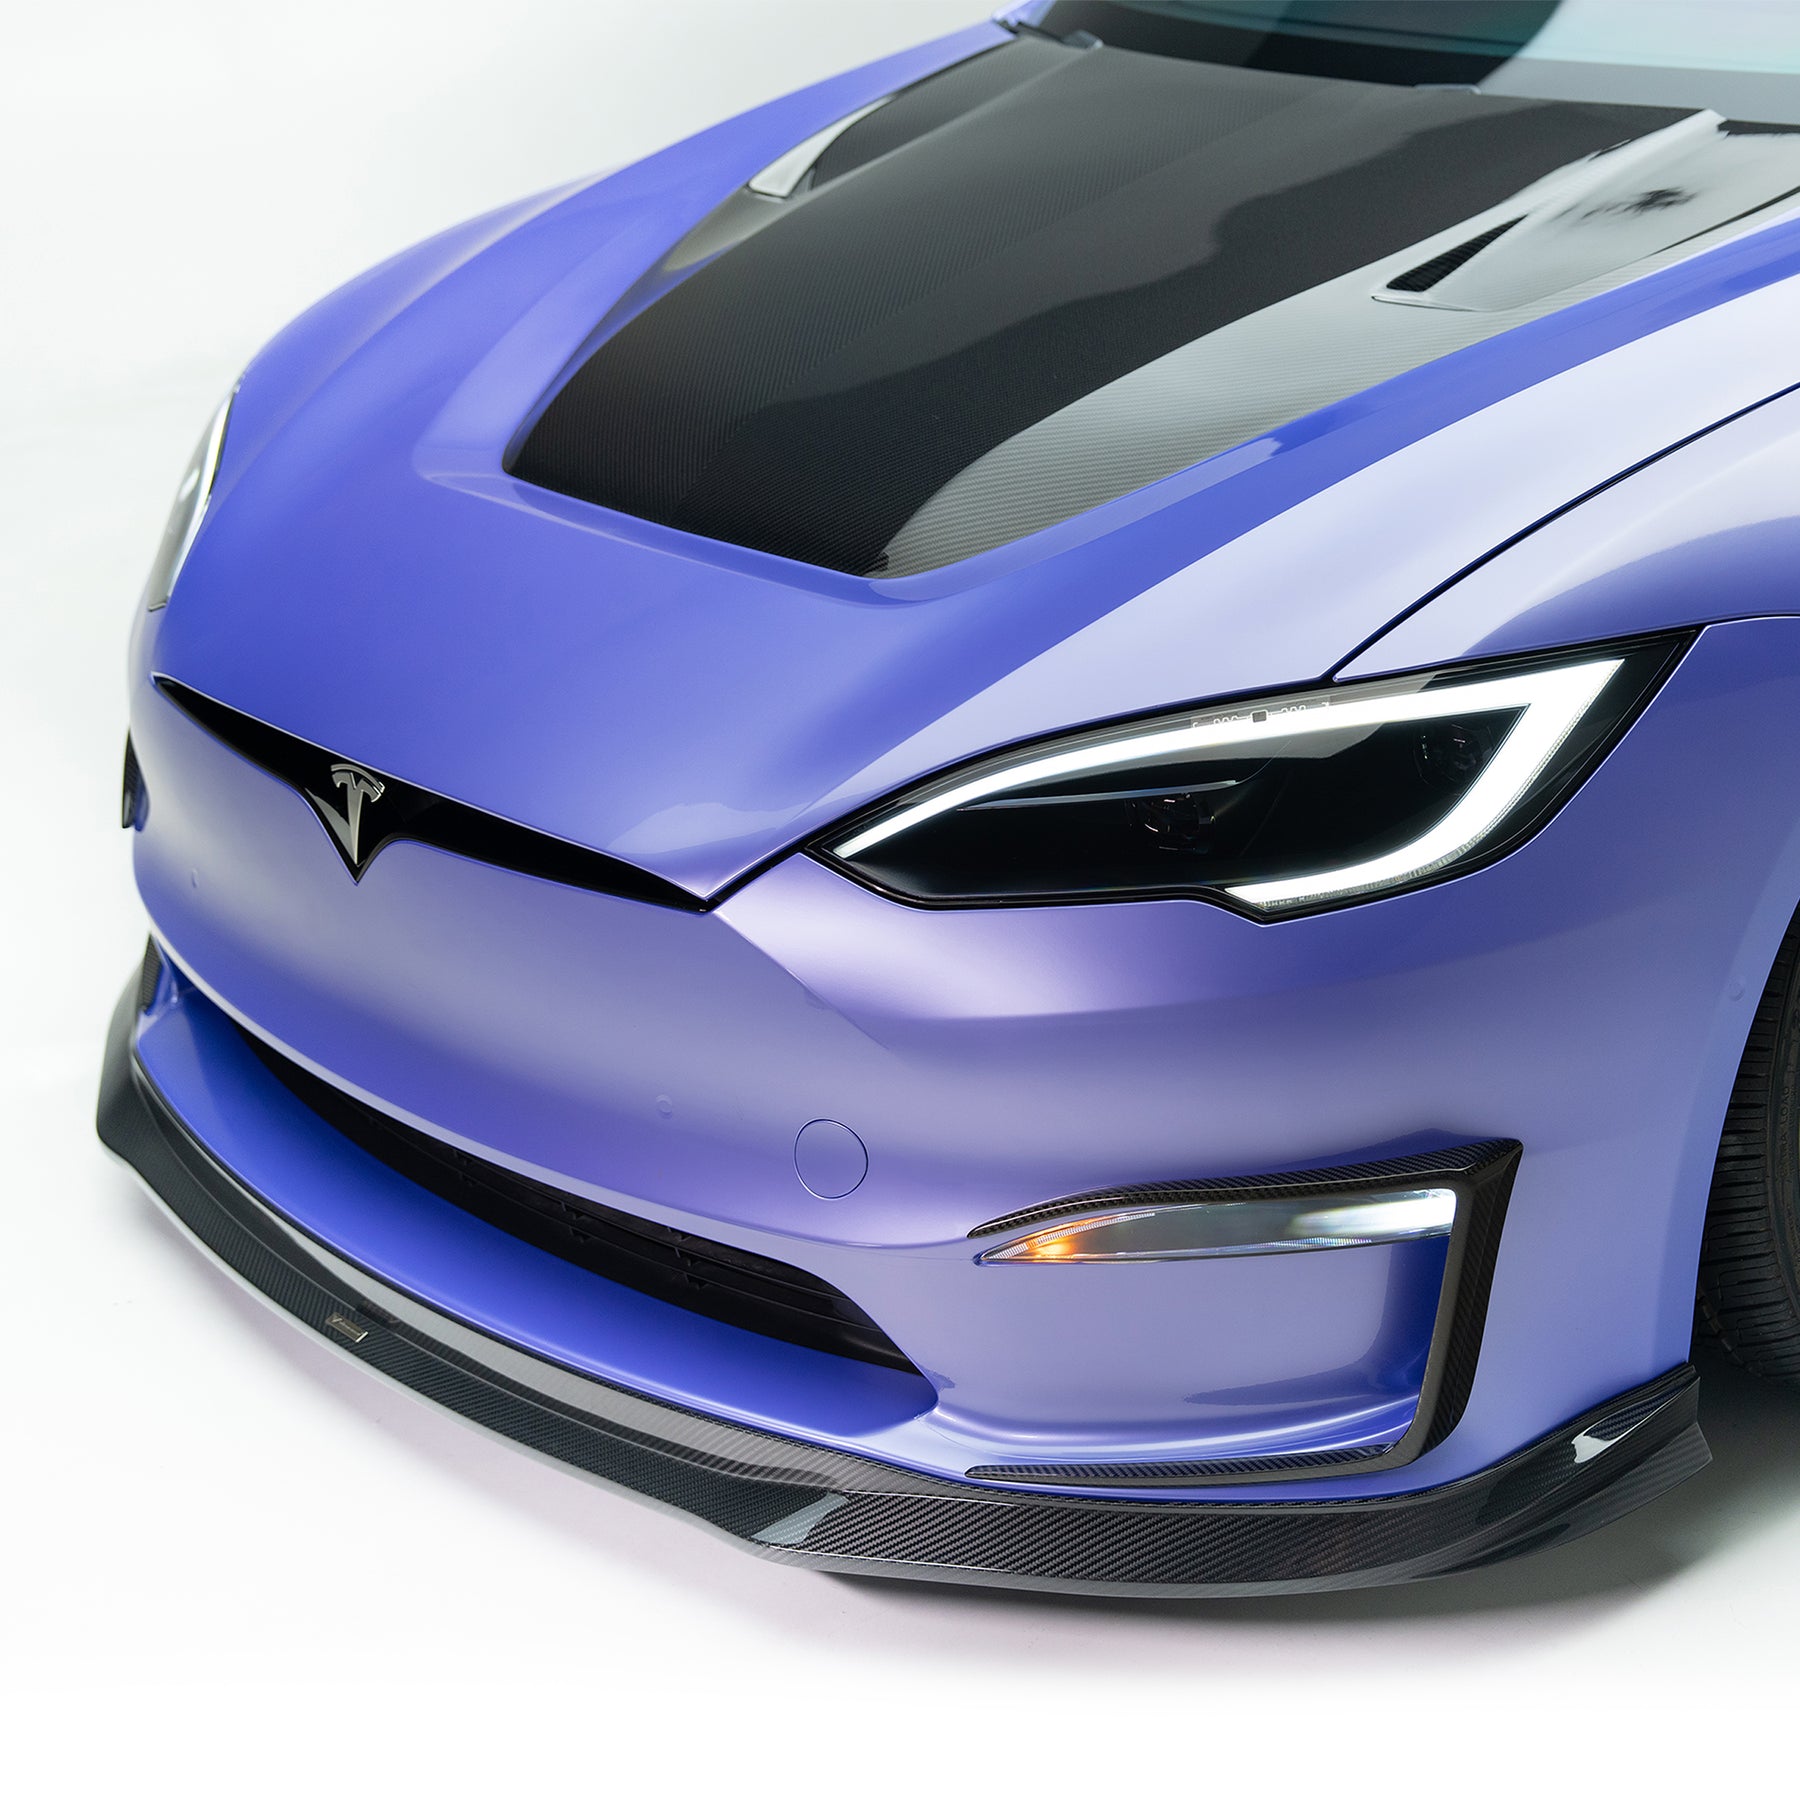 VRS Tesla Model S Plaid Aero Front Spoiler Carbon Fiber PP 2X2 Glossy